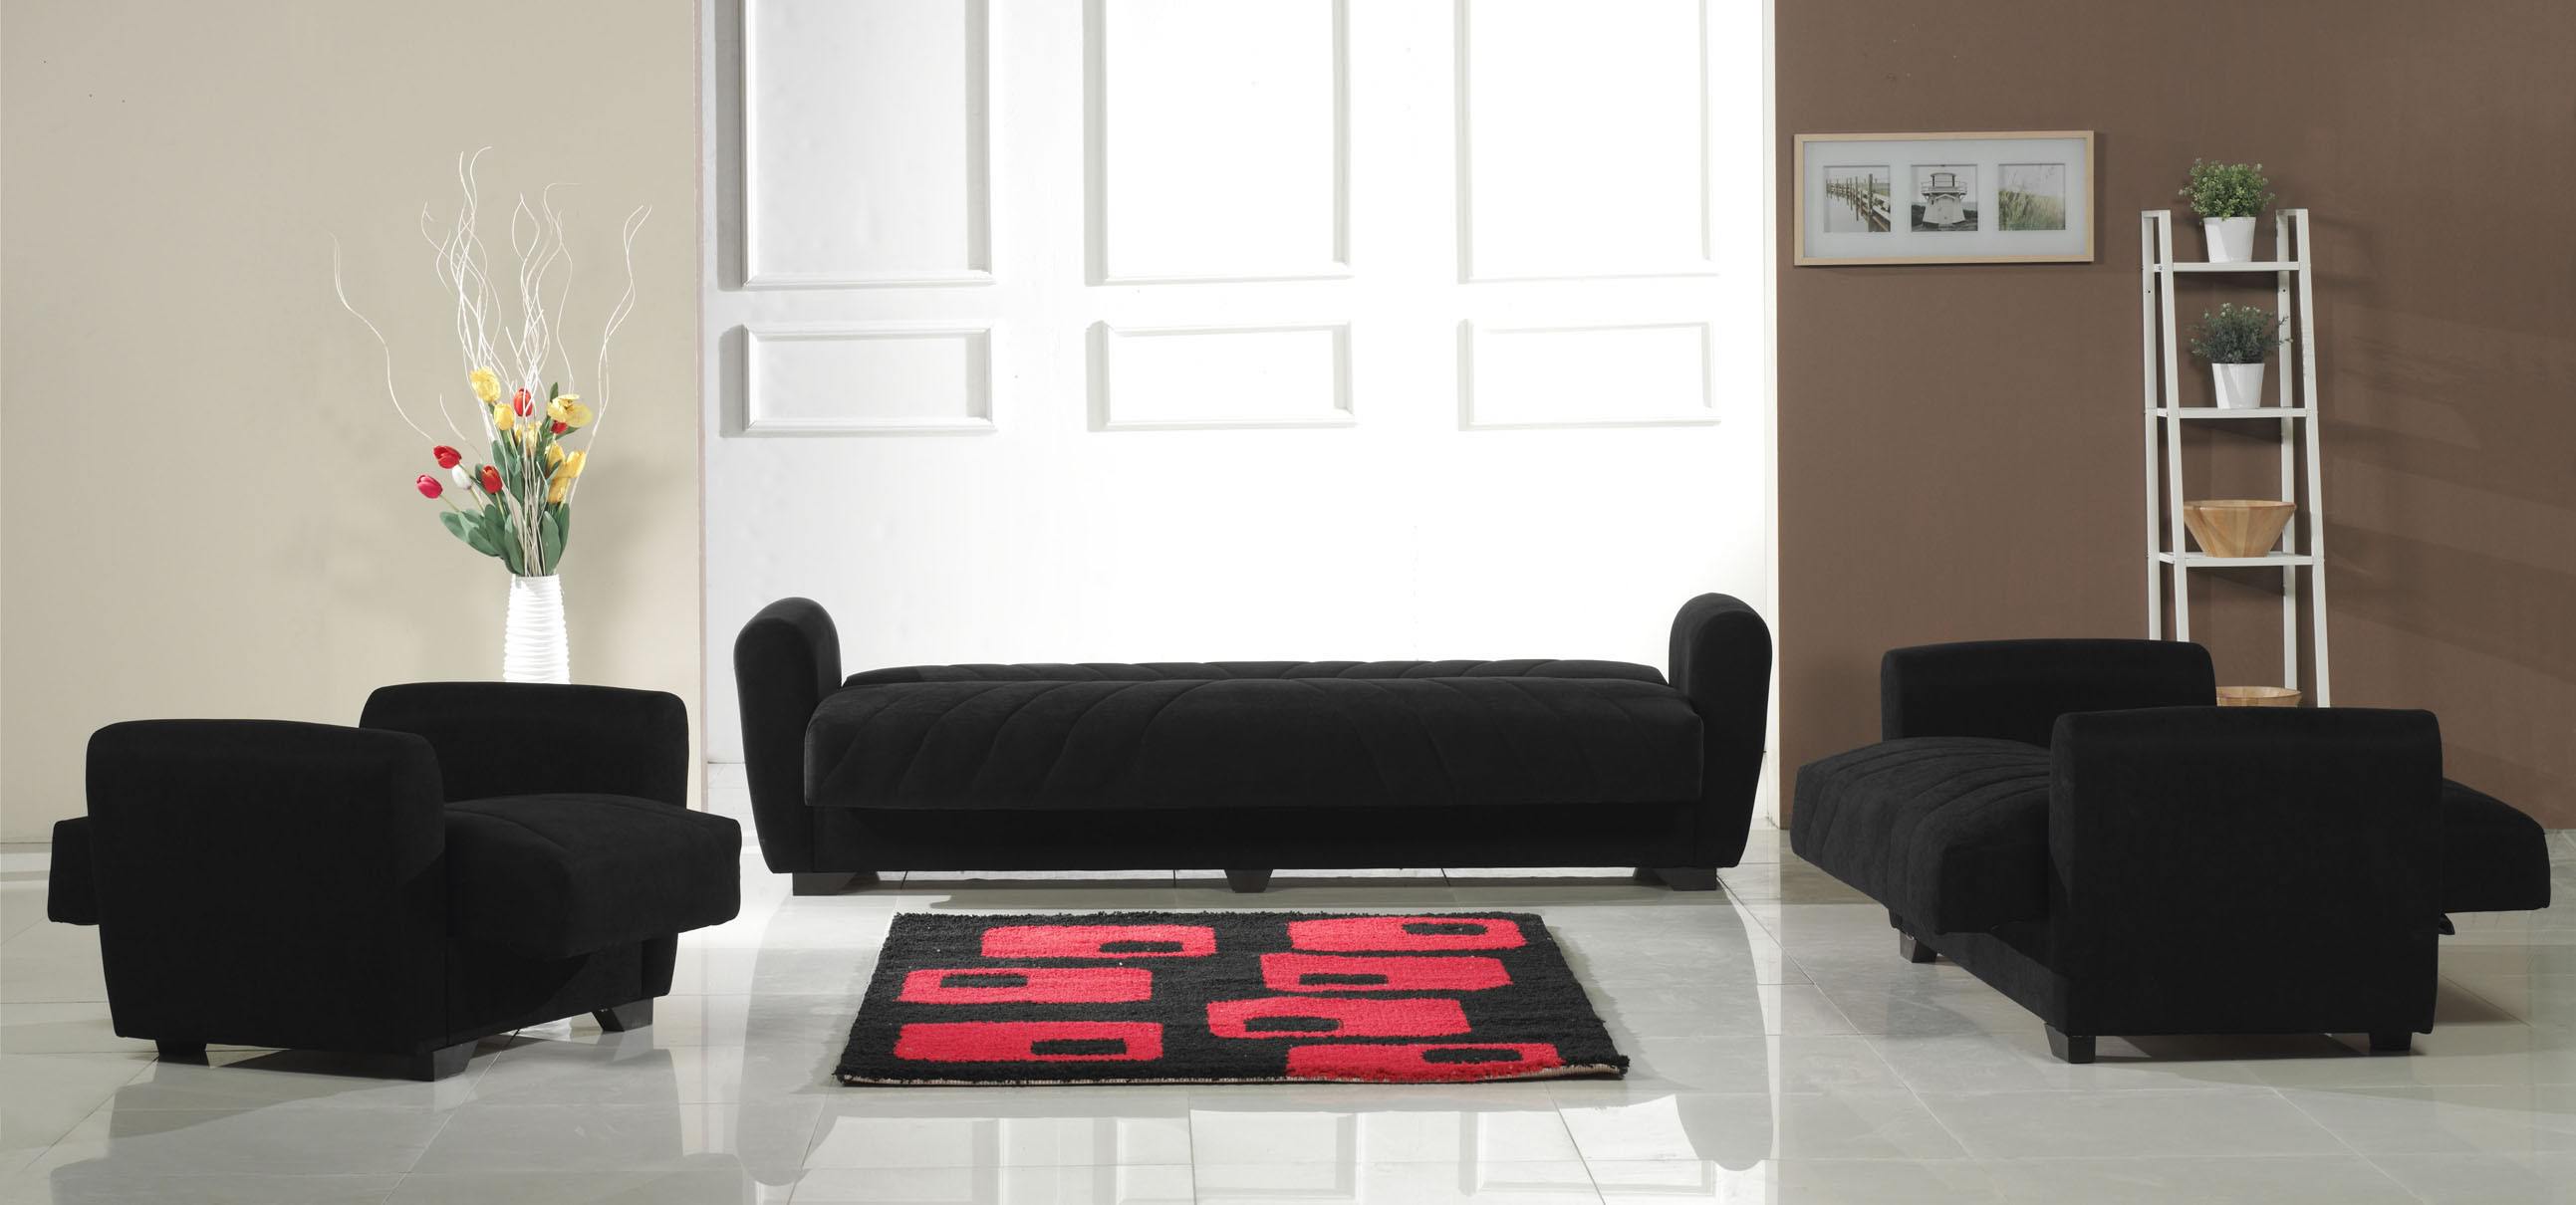 Orlando Sofa Bed By Empire Furniture USA